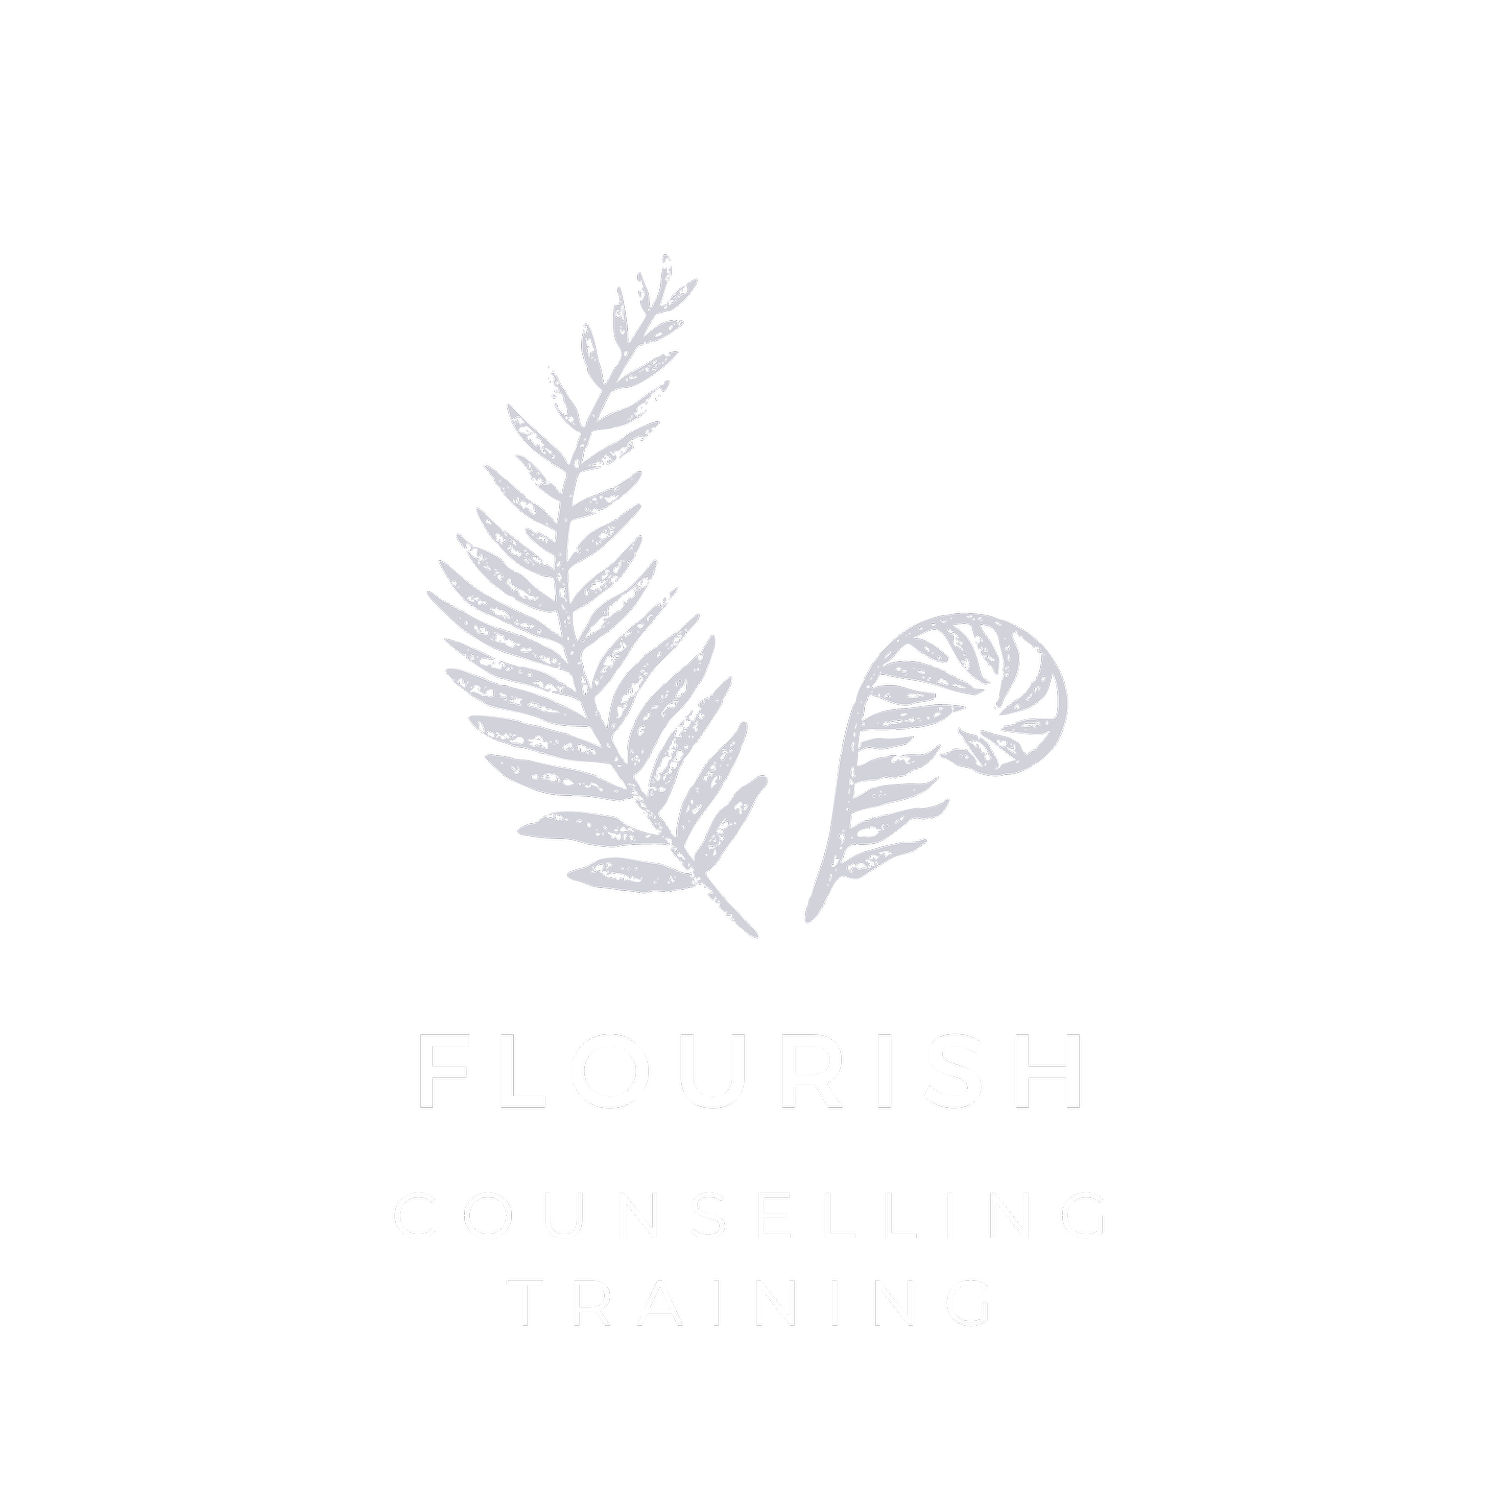   Flourish Counselling Training